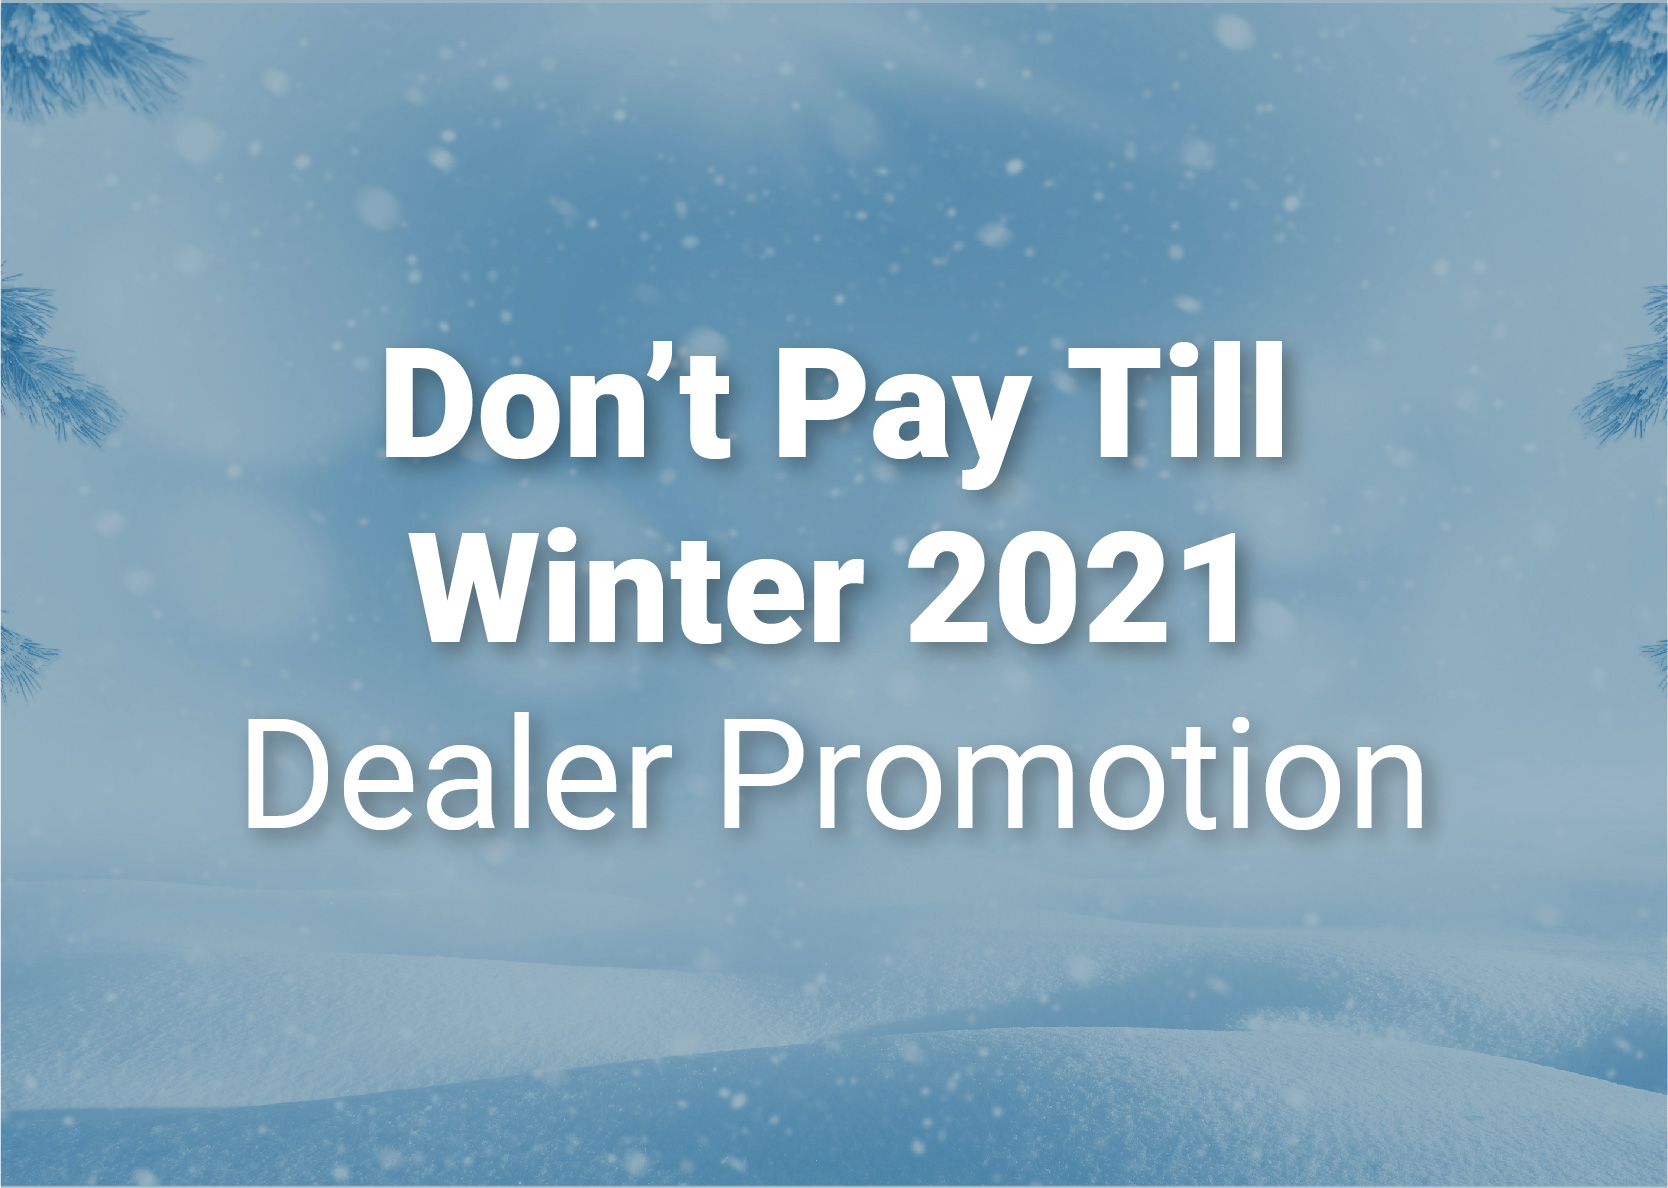 don't pay till winter 2021, dealer promotion